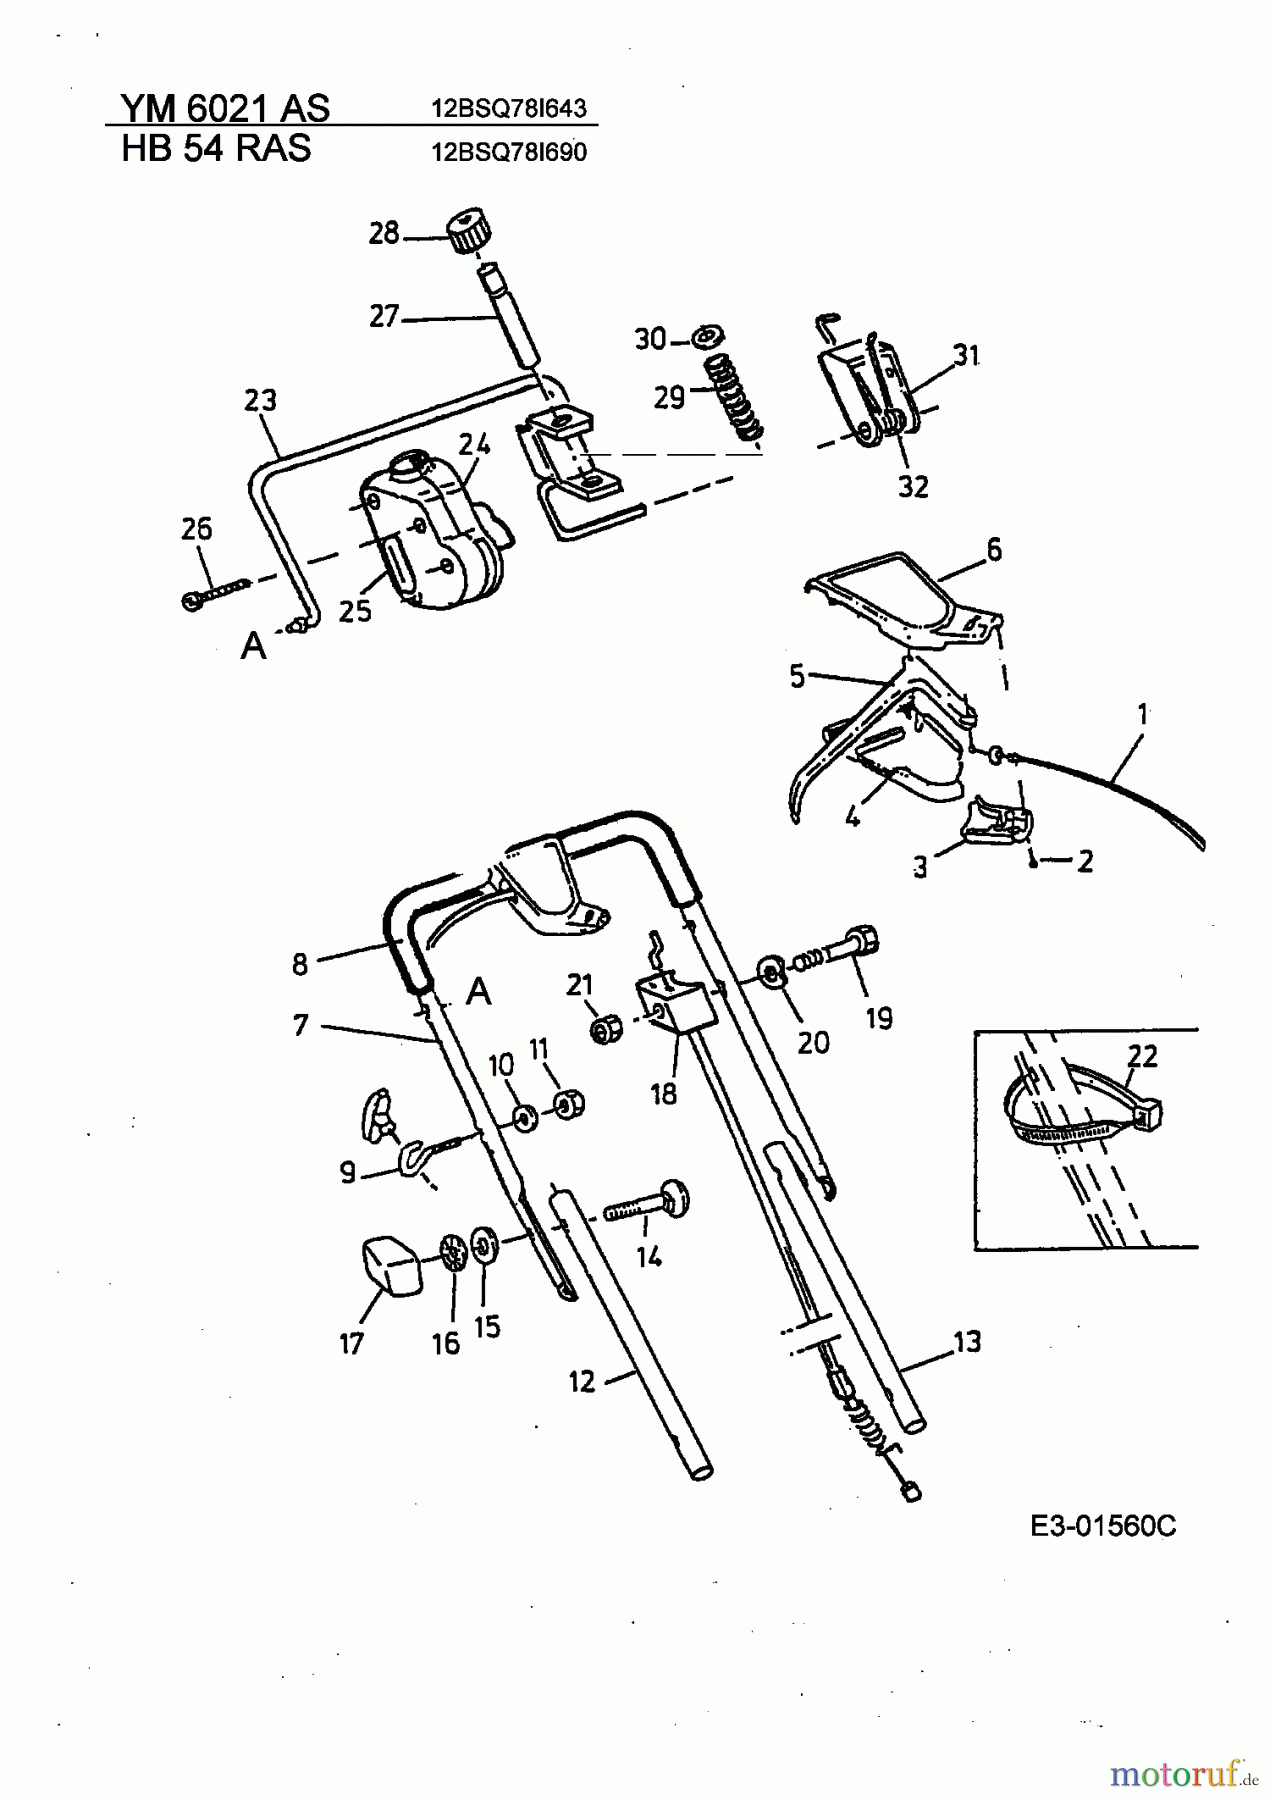  Gutbrod Petrol mower self propelled HB 54 RAS 12BSQ78I690  (2003) Upper handle